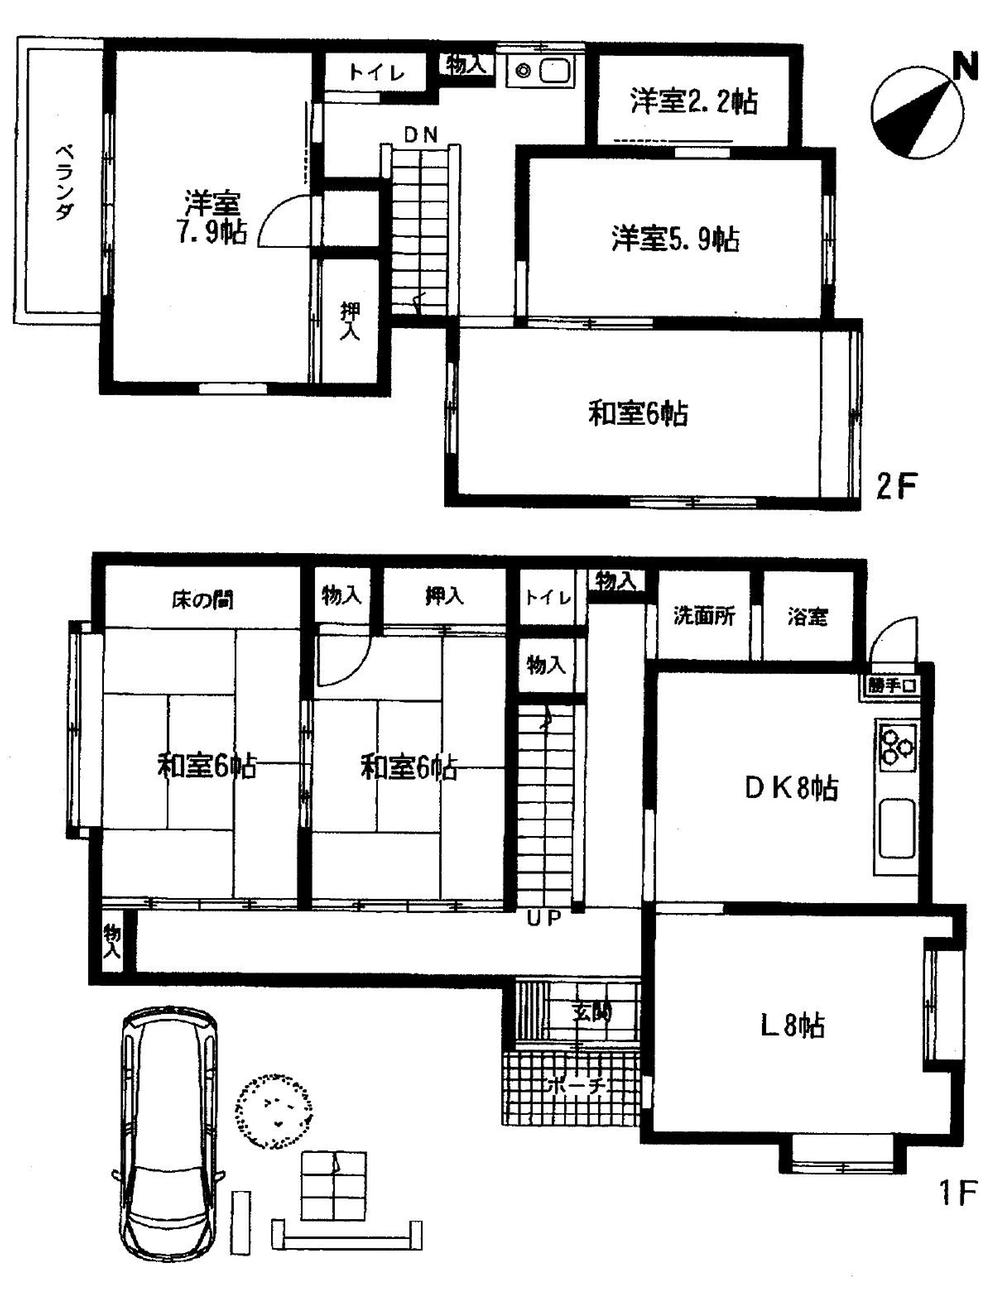 Floor plan. 17 million yen, 5LDK + S (storeroom), Land area 160.78 sq m , Building area 140.48 sq m